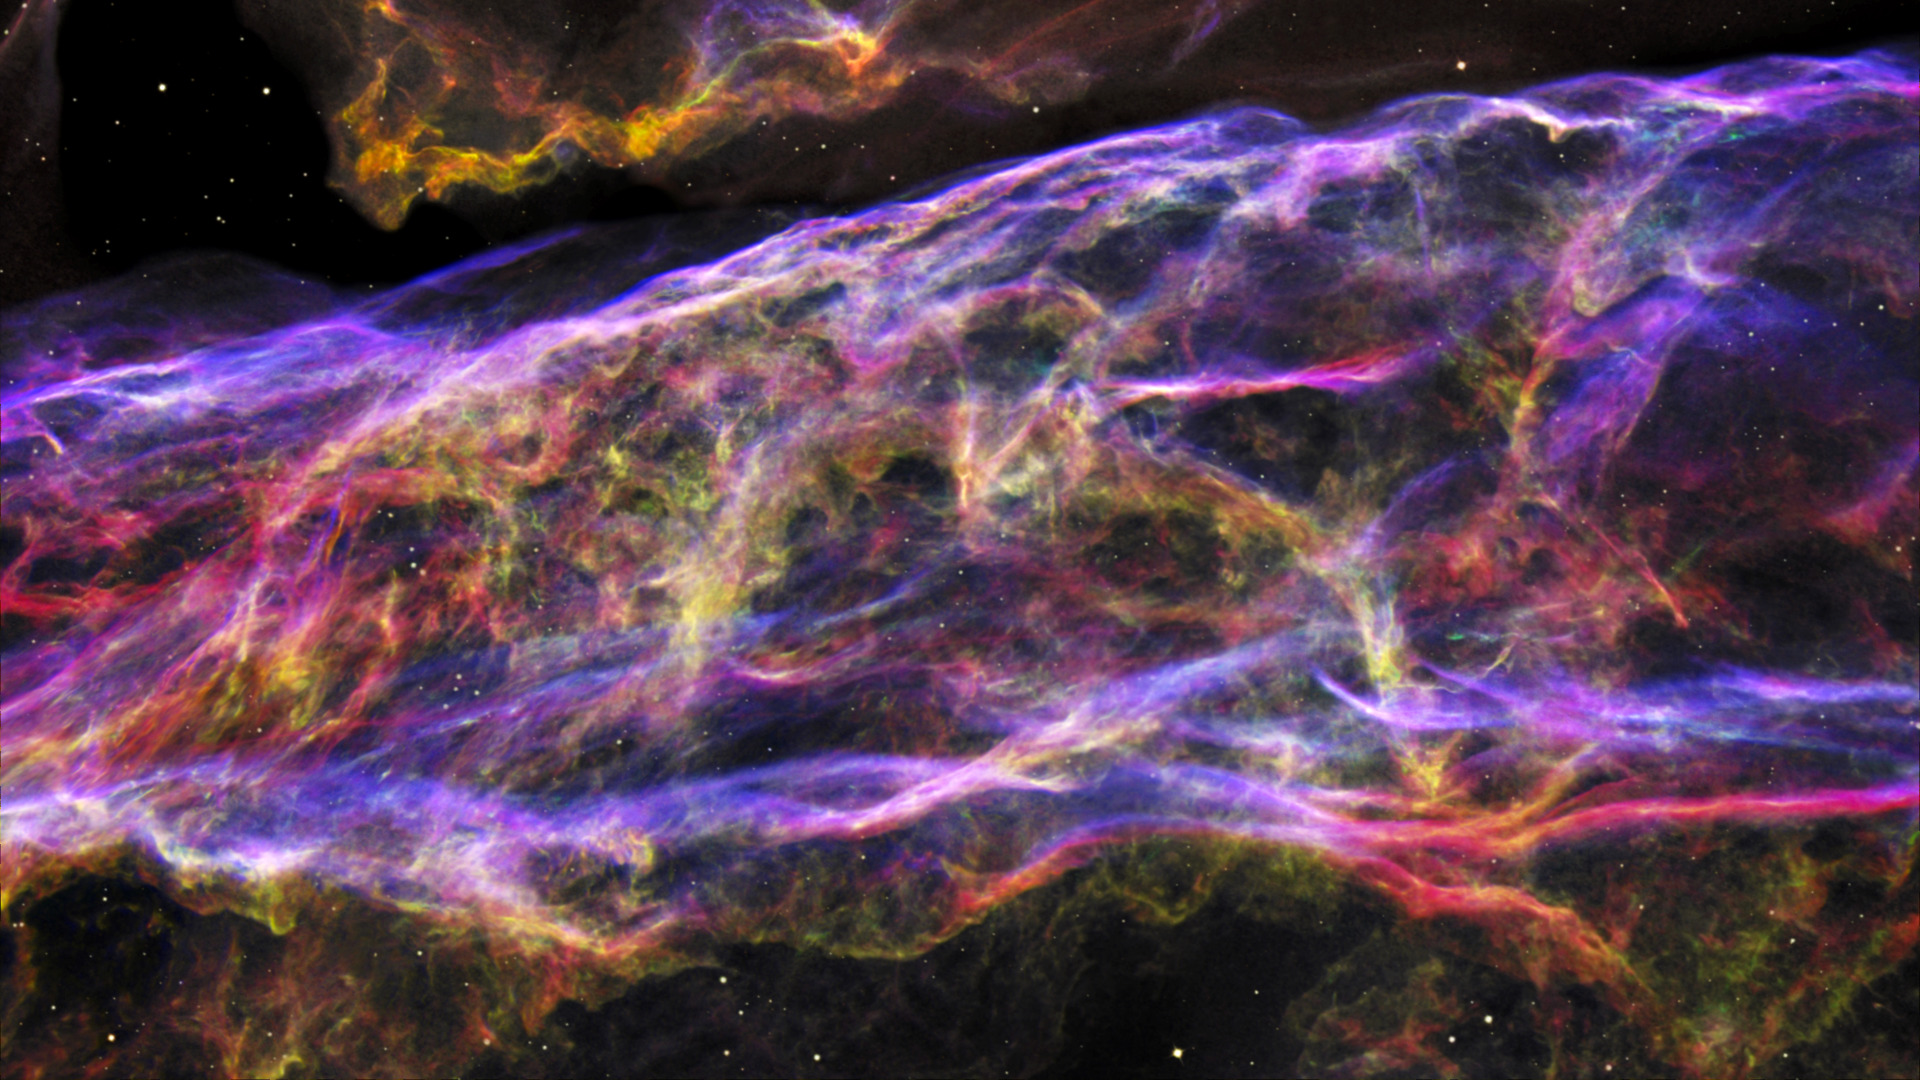 Visualization of a small region of the Veil Nebula, a supernova remnant